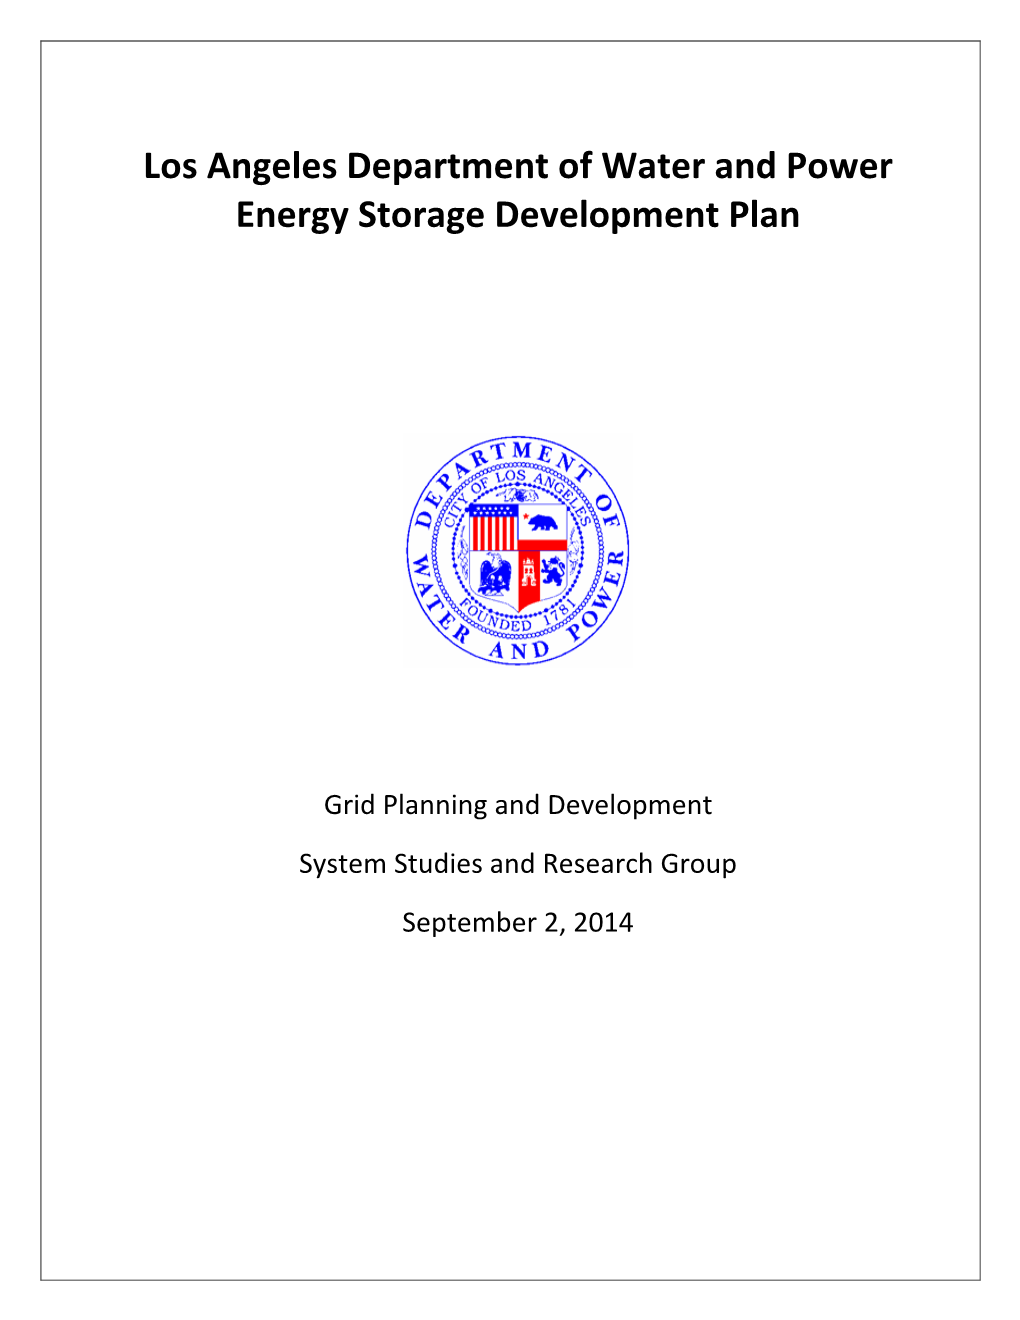 Energy Storage Development Plan